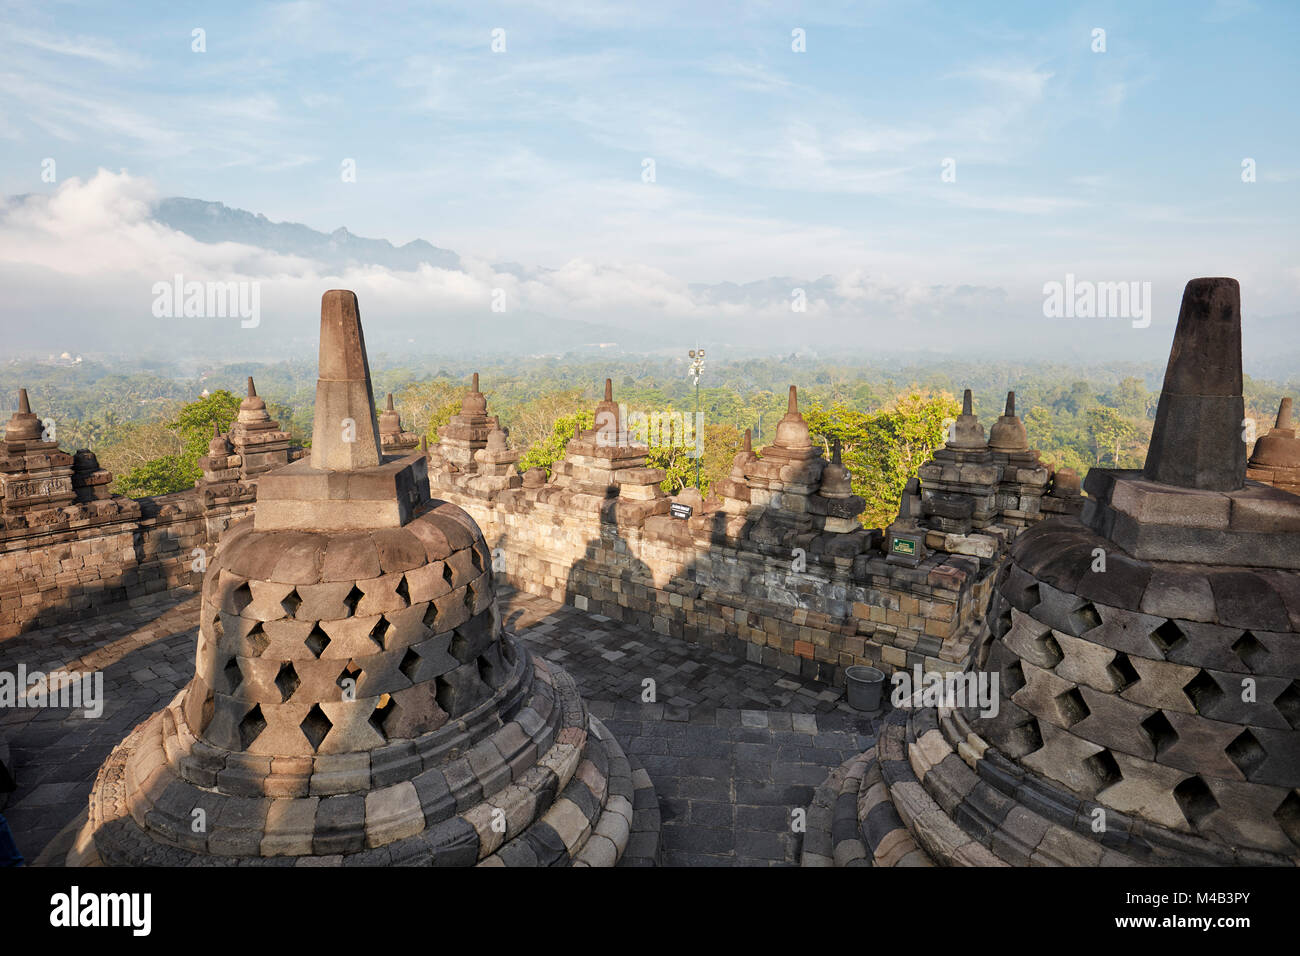 Rhombus durchlöcherte Stupas in Borobudur buddhistischen Tempel. Magelang Regency, Java, Indonesien. Stockfoto